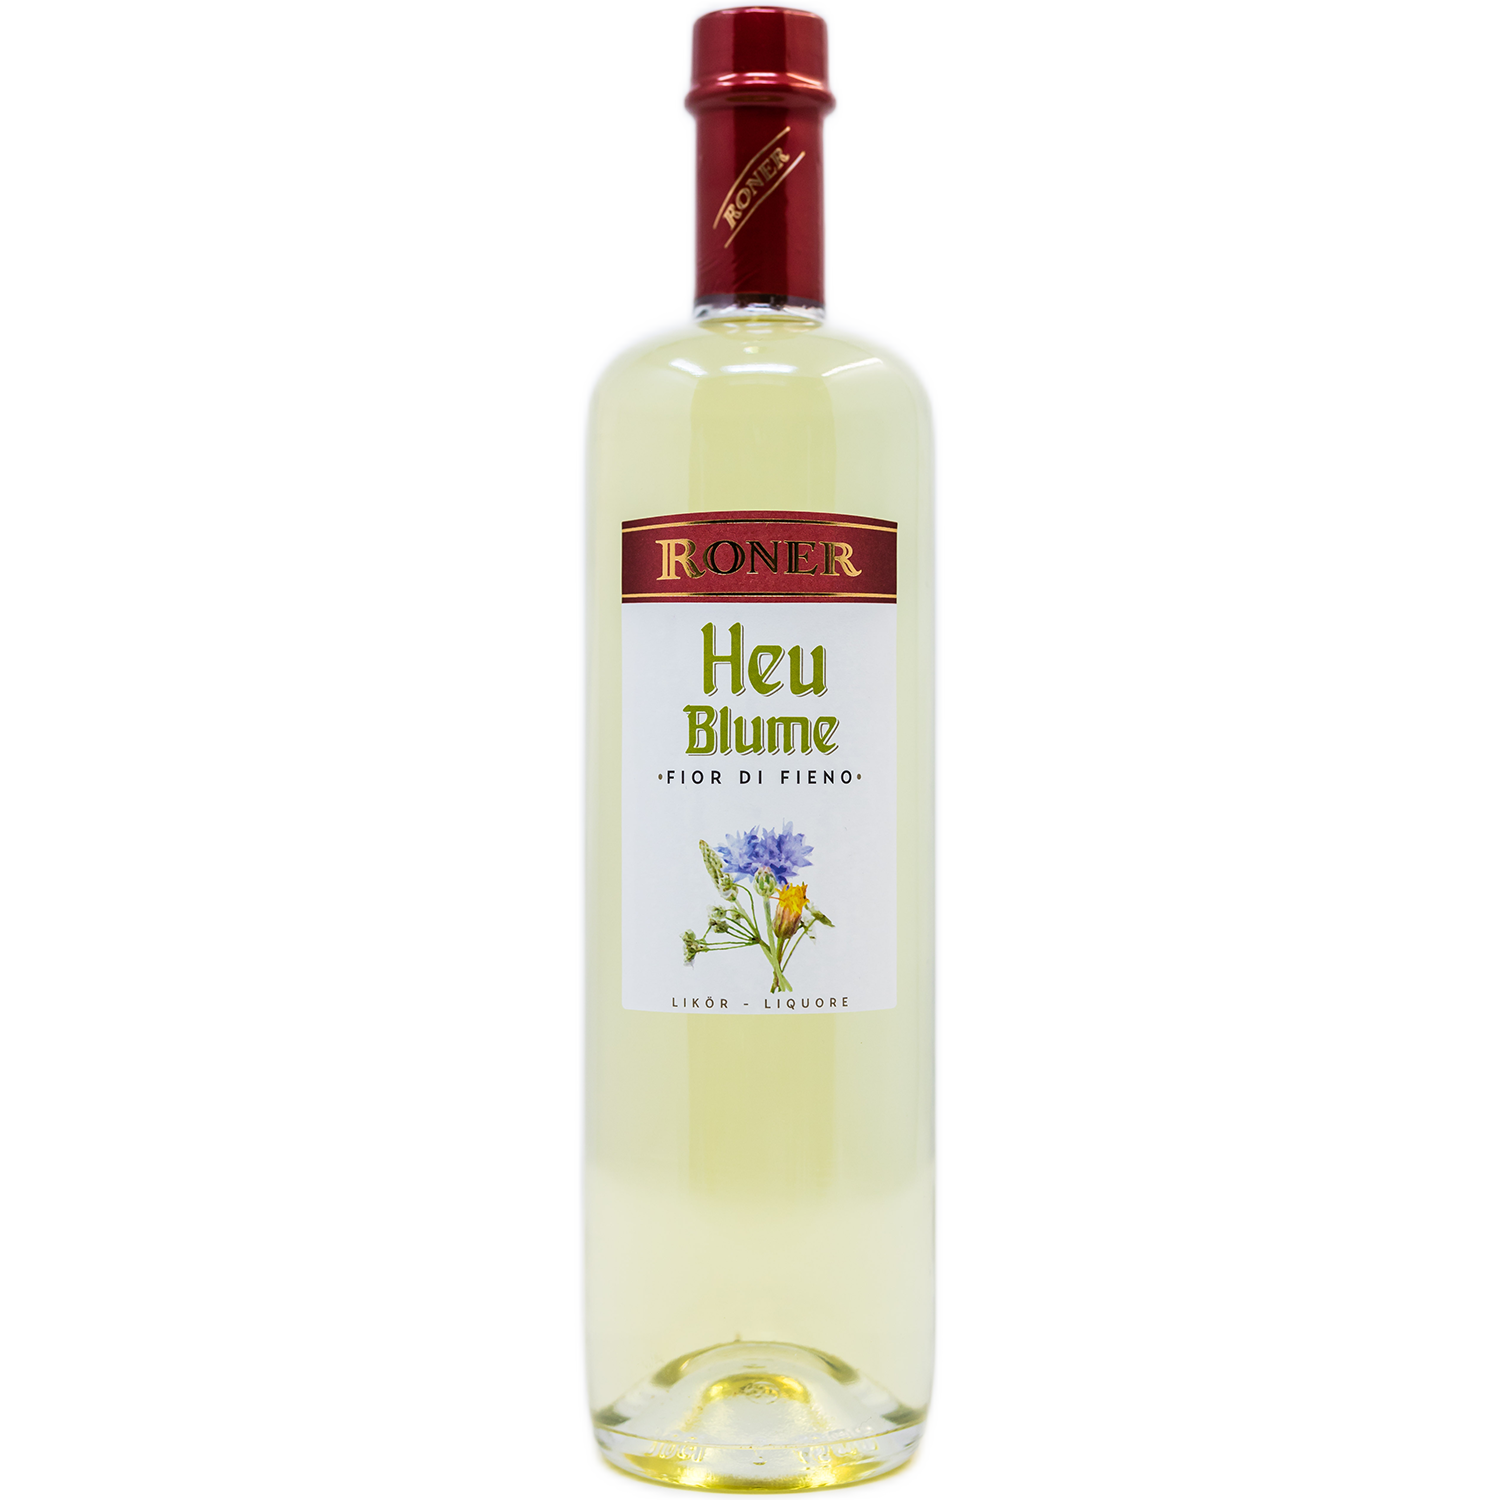 Hayflowers Liqueur by Roner in 700ml bottle